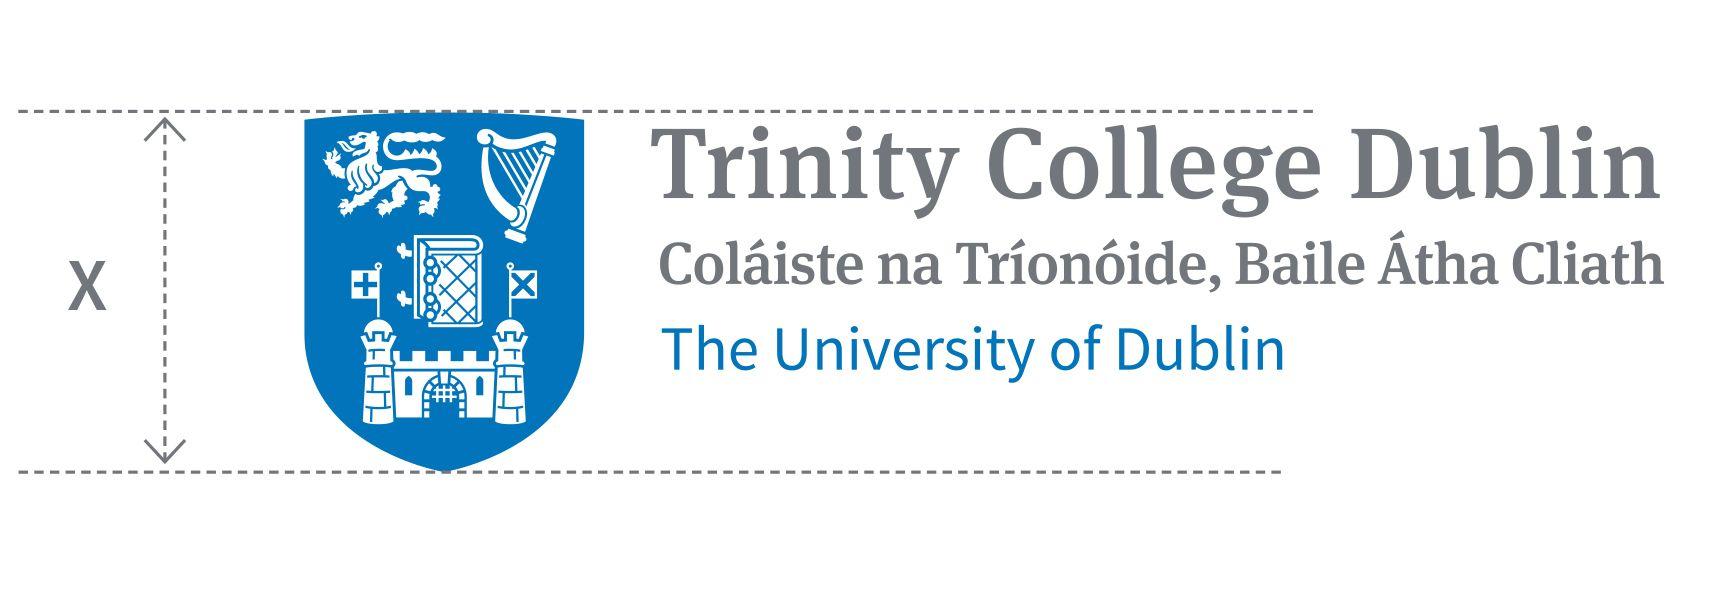 TCD Logo - Identity College Dublin